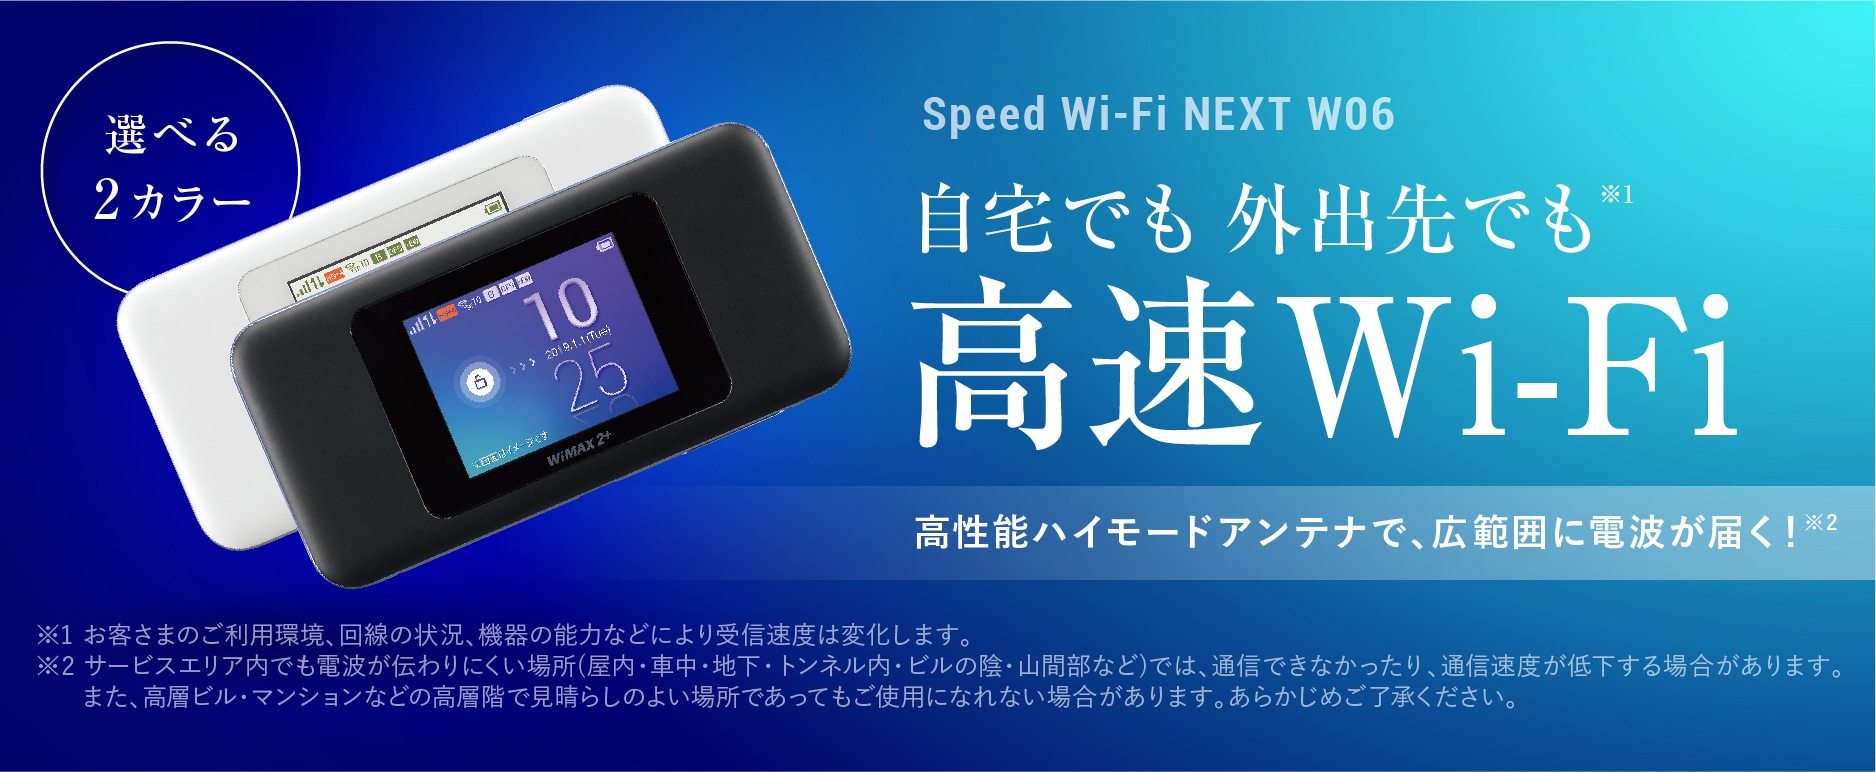 【Speed Wi-Fi NEXT W06】自宅でも外出先でも高速Wi-Fi